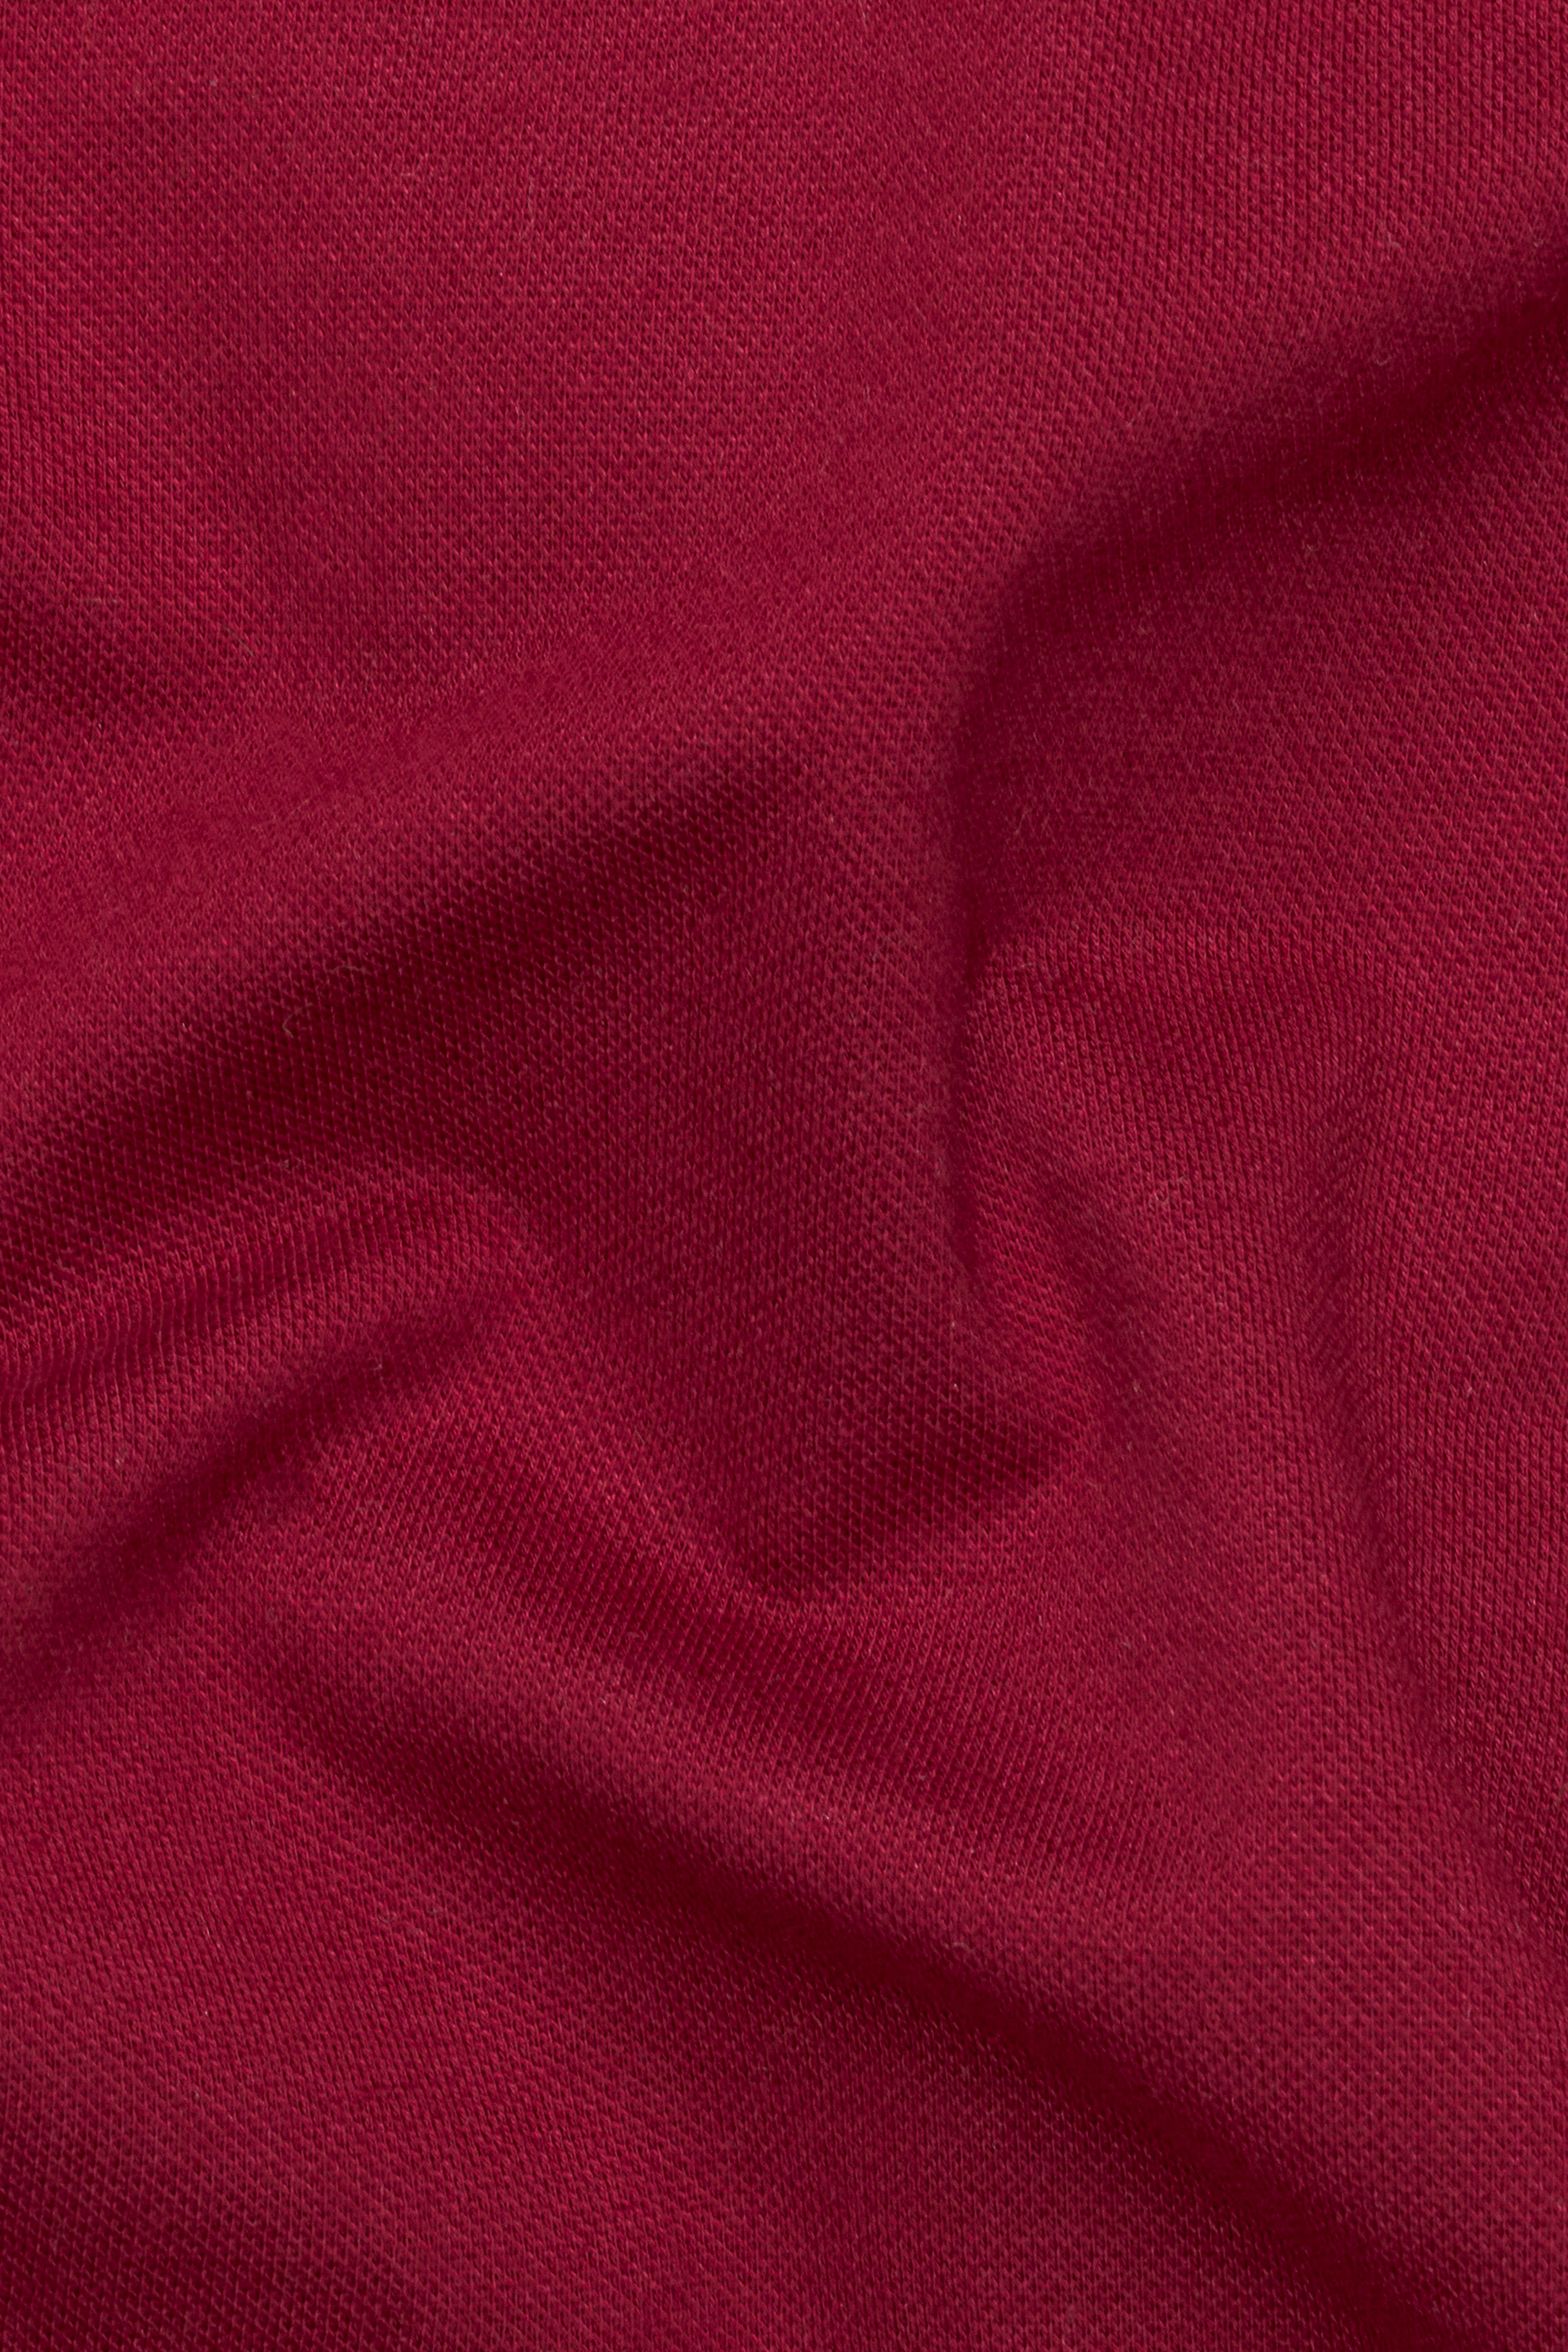 Persian Plum Red Premium Cotton Pique Polo TS933-S, TS933-M, TS933-L, TS933-XL, TS933-XXL